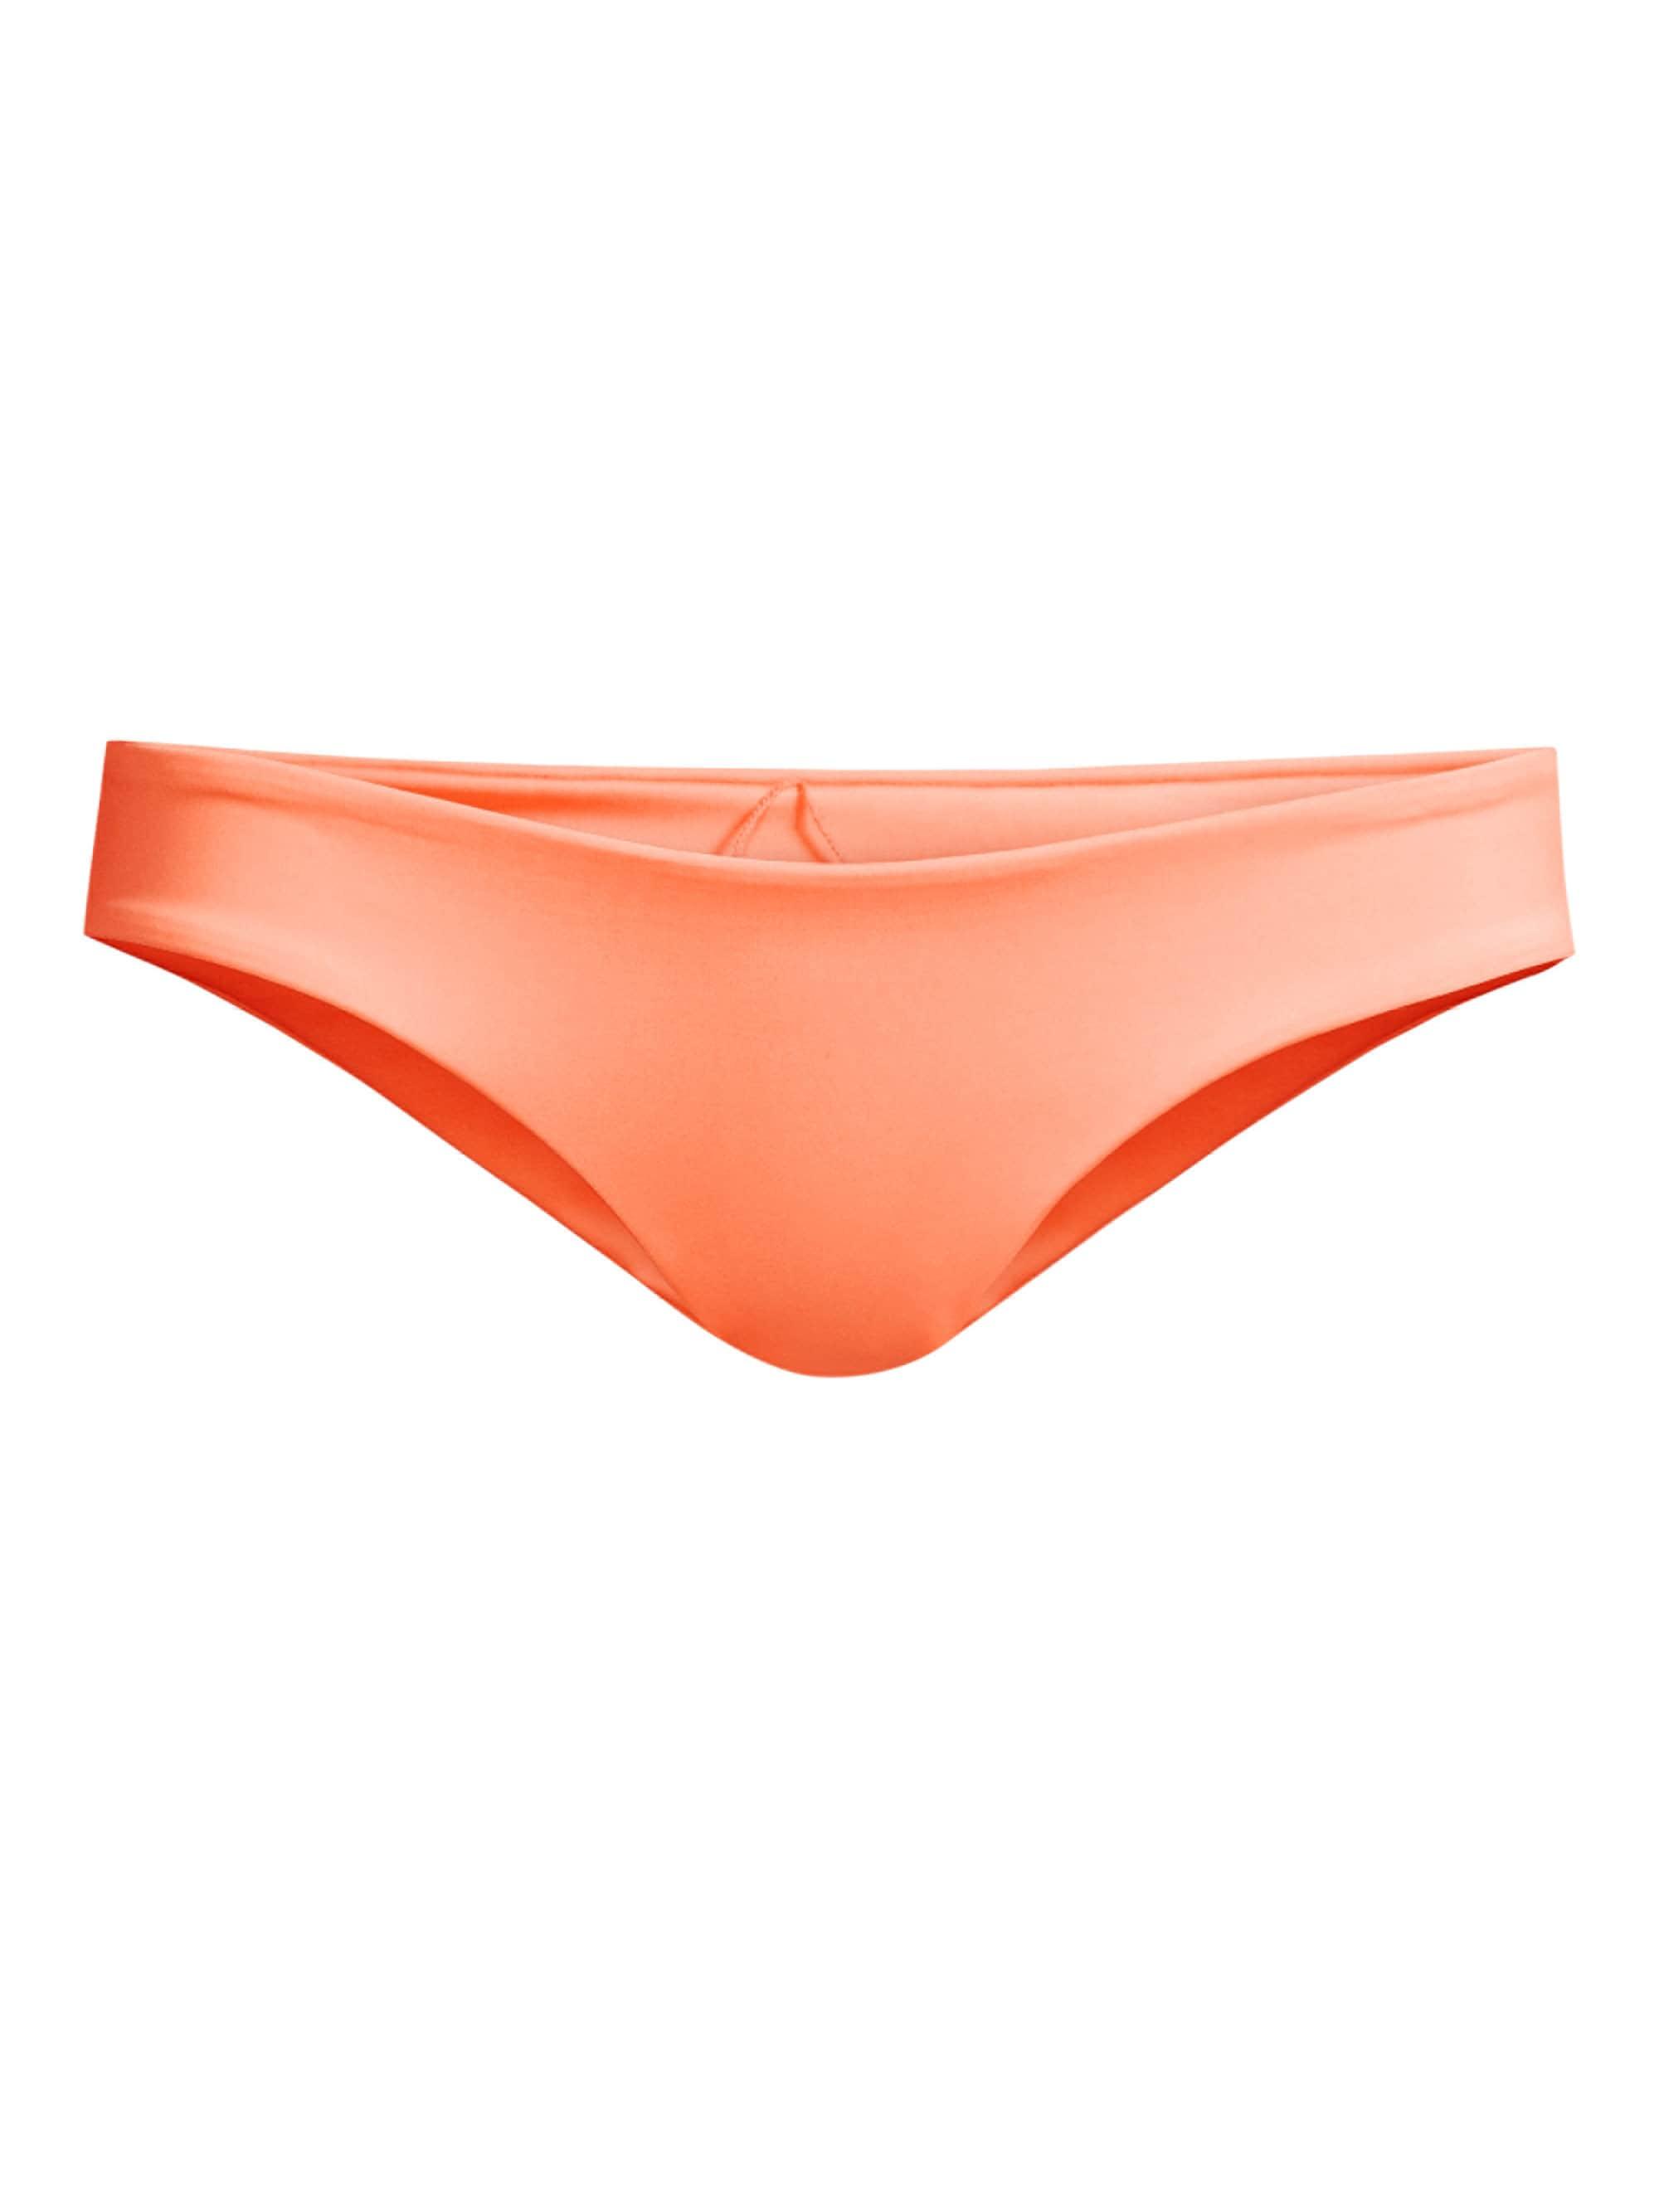 Lyst - L*Space Sensual Solids Sandy Bikini Bottom in Orange